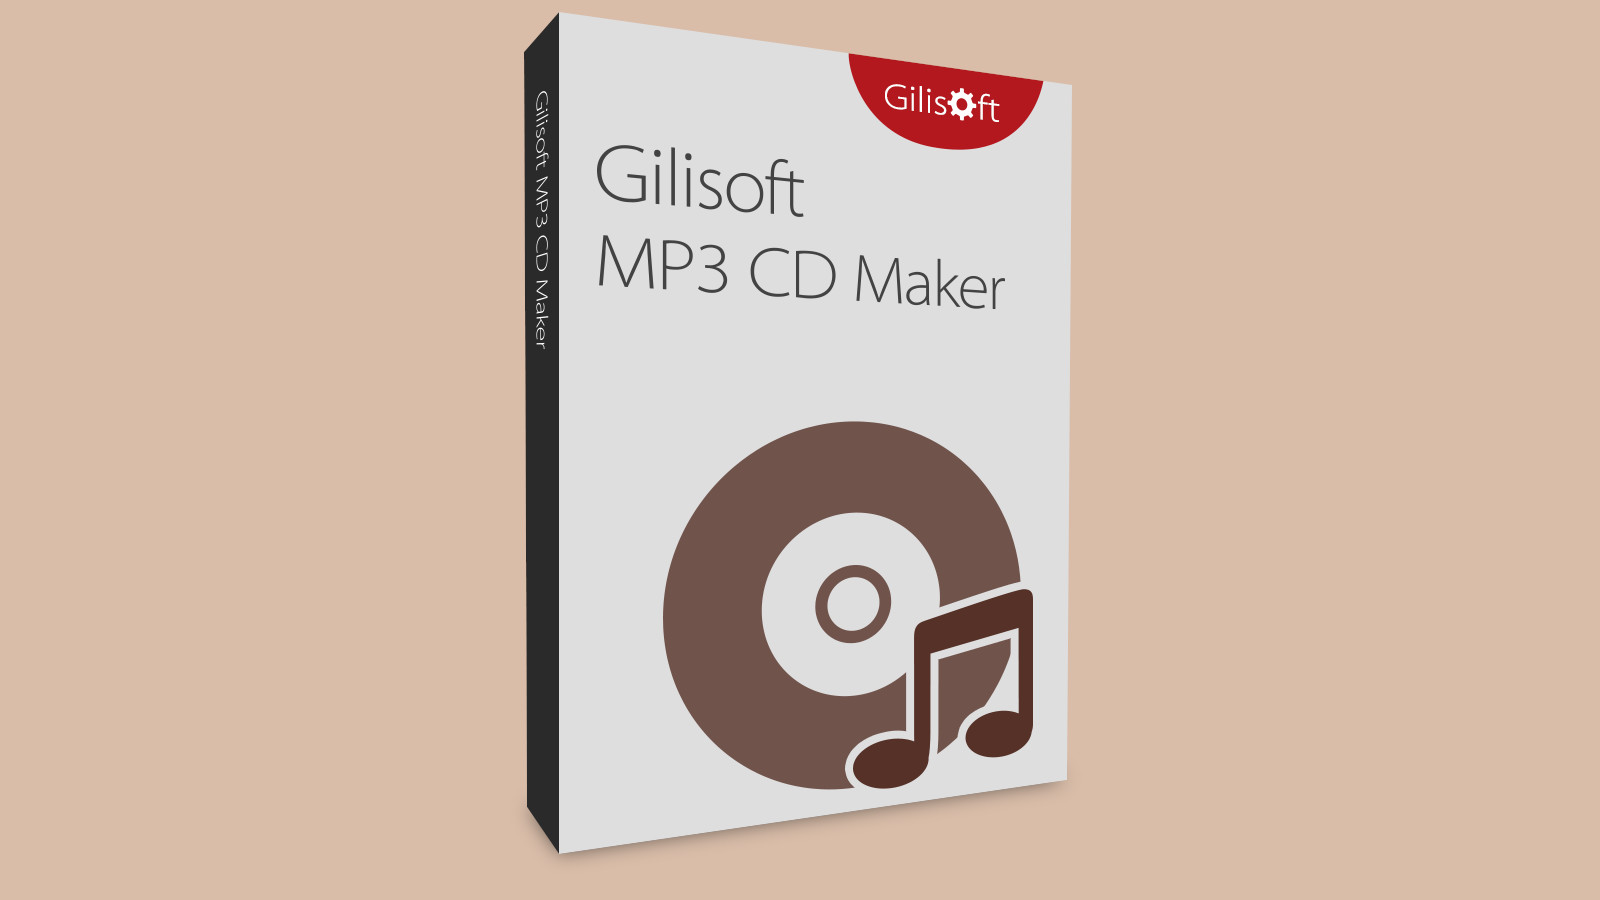 (5.65$) Gilisoft MP3 CD Maker CD Key